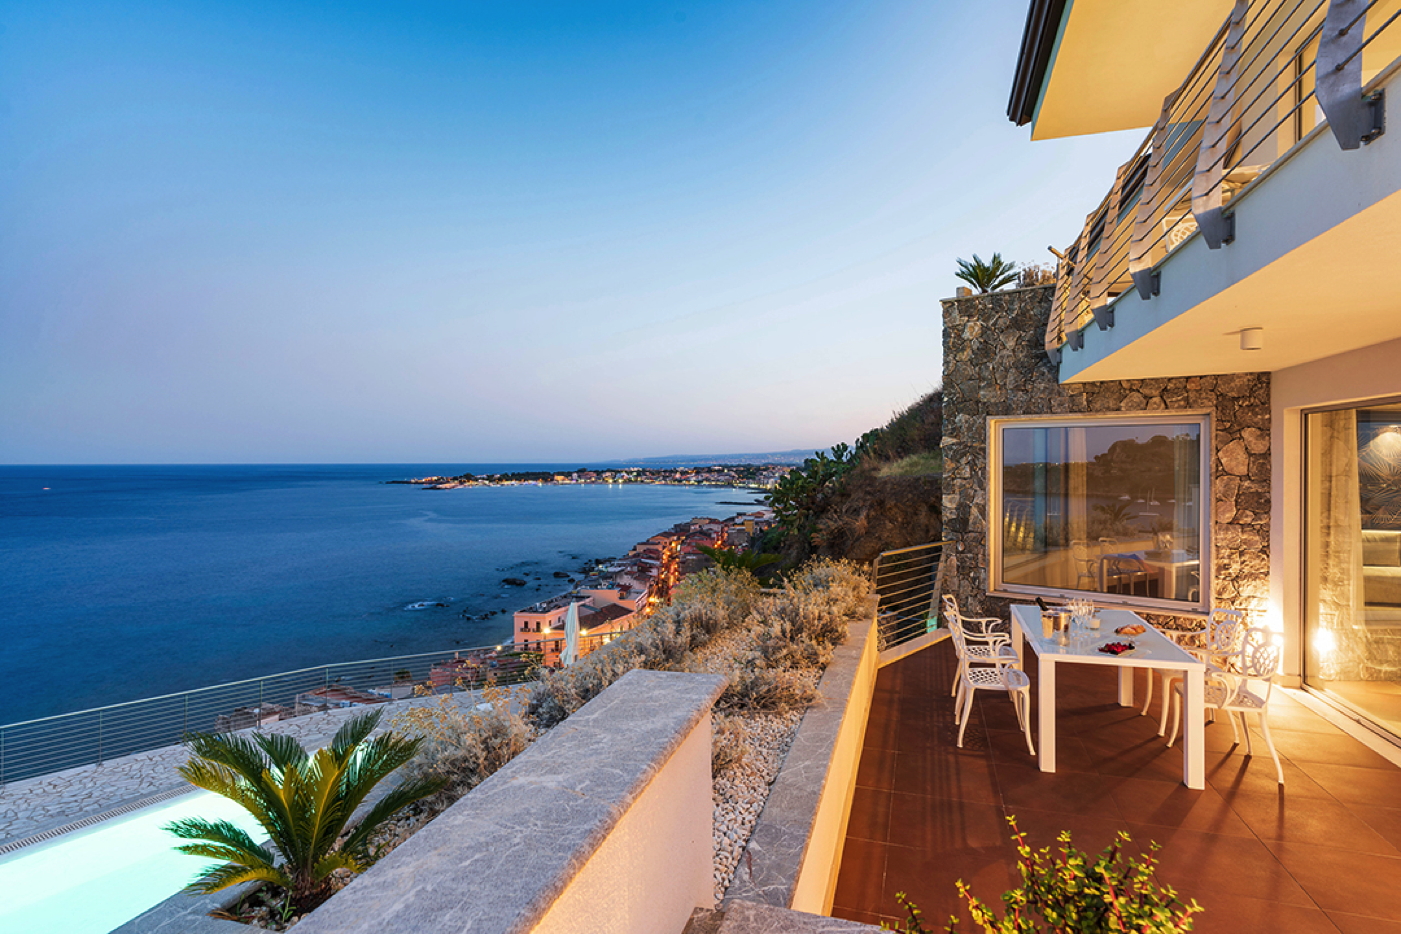 Luxury villa pool sea view events family reunions Taormina Italy Sicily
